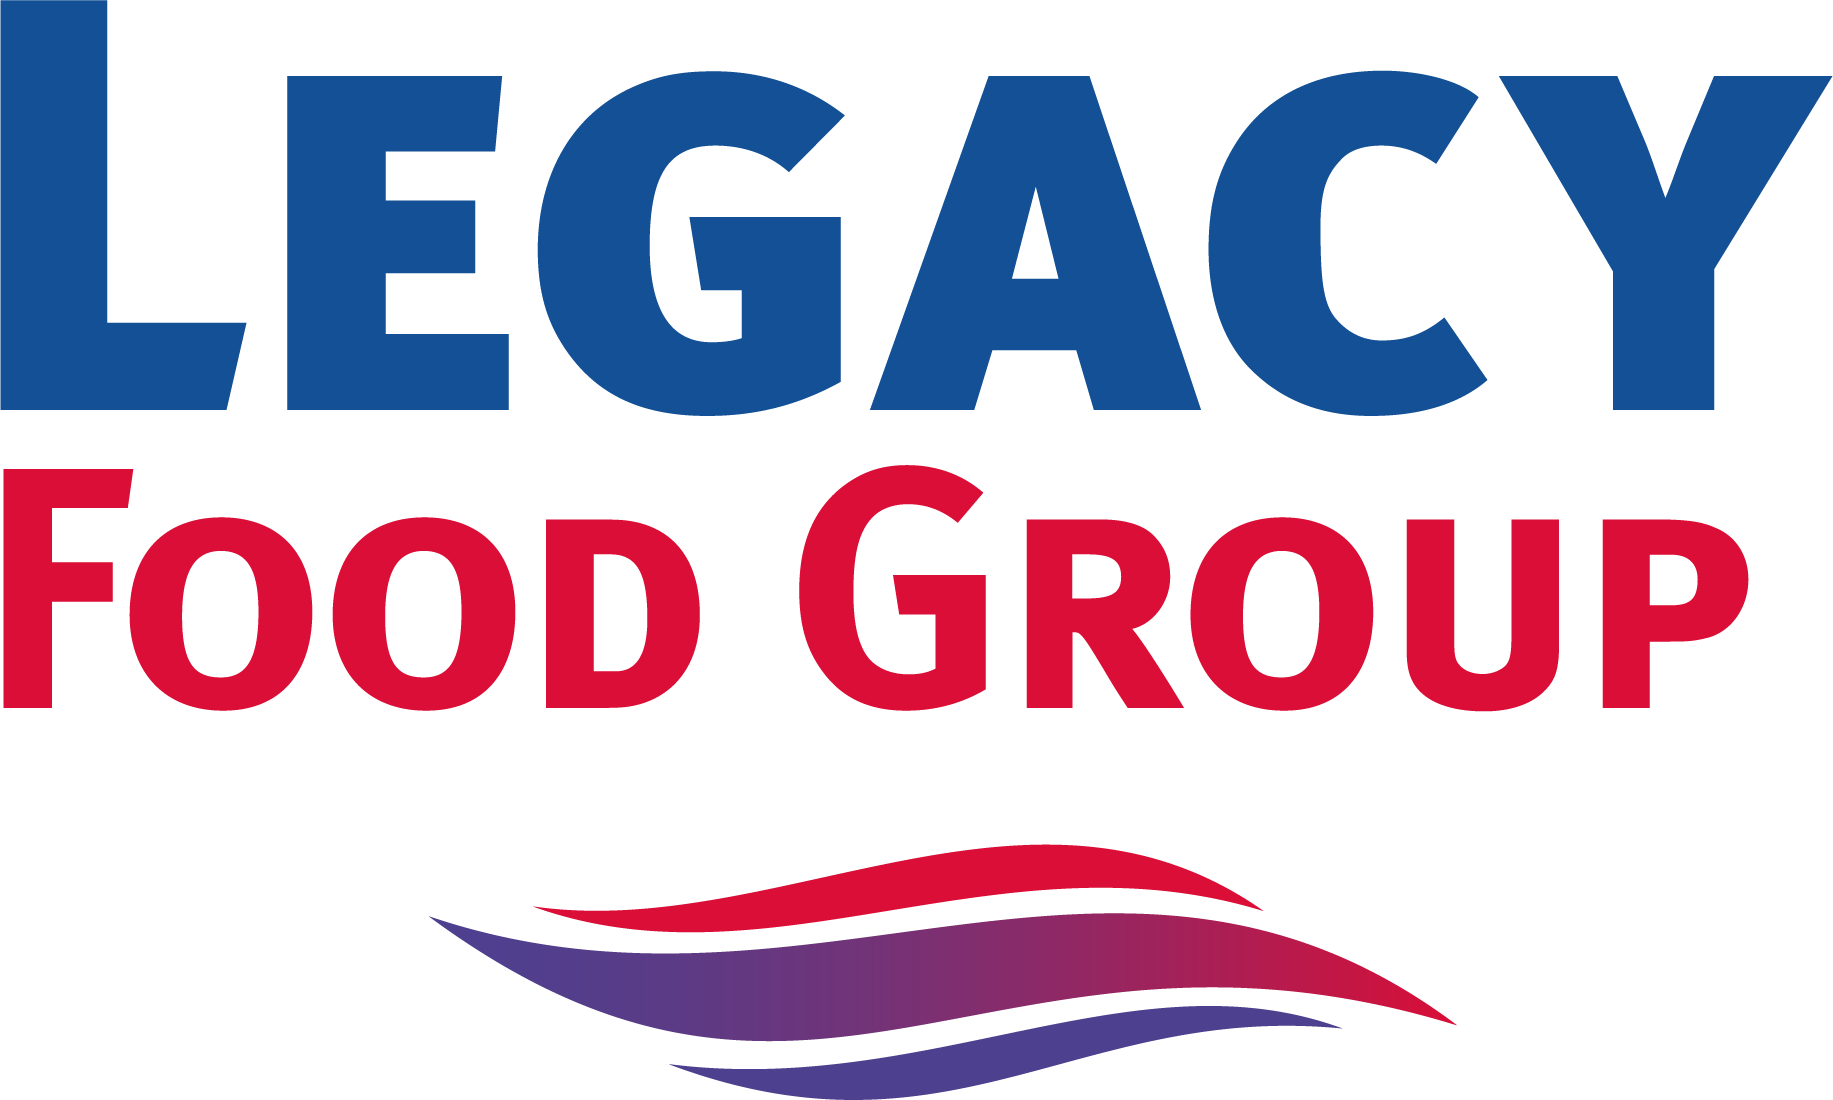 Legacy Food Group